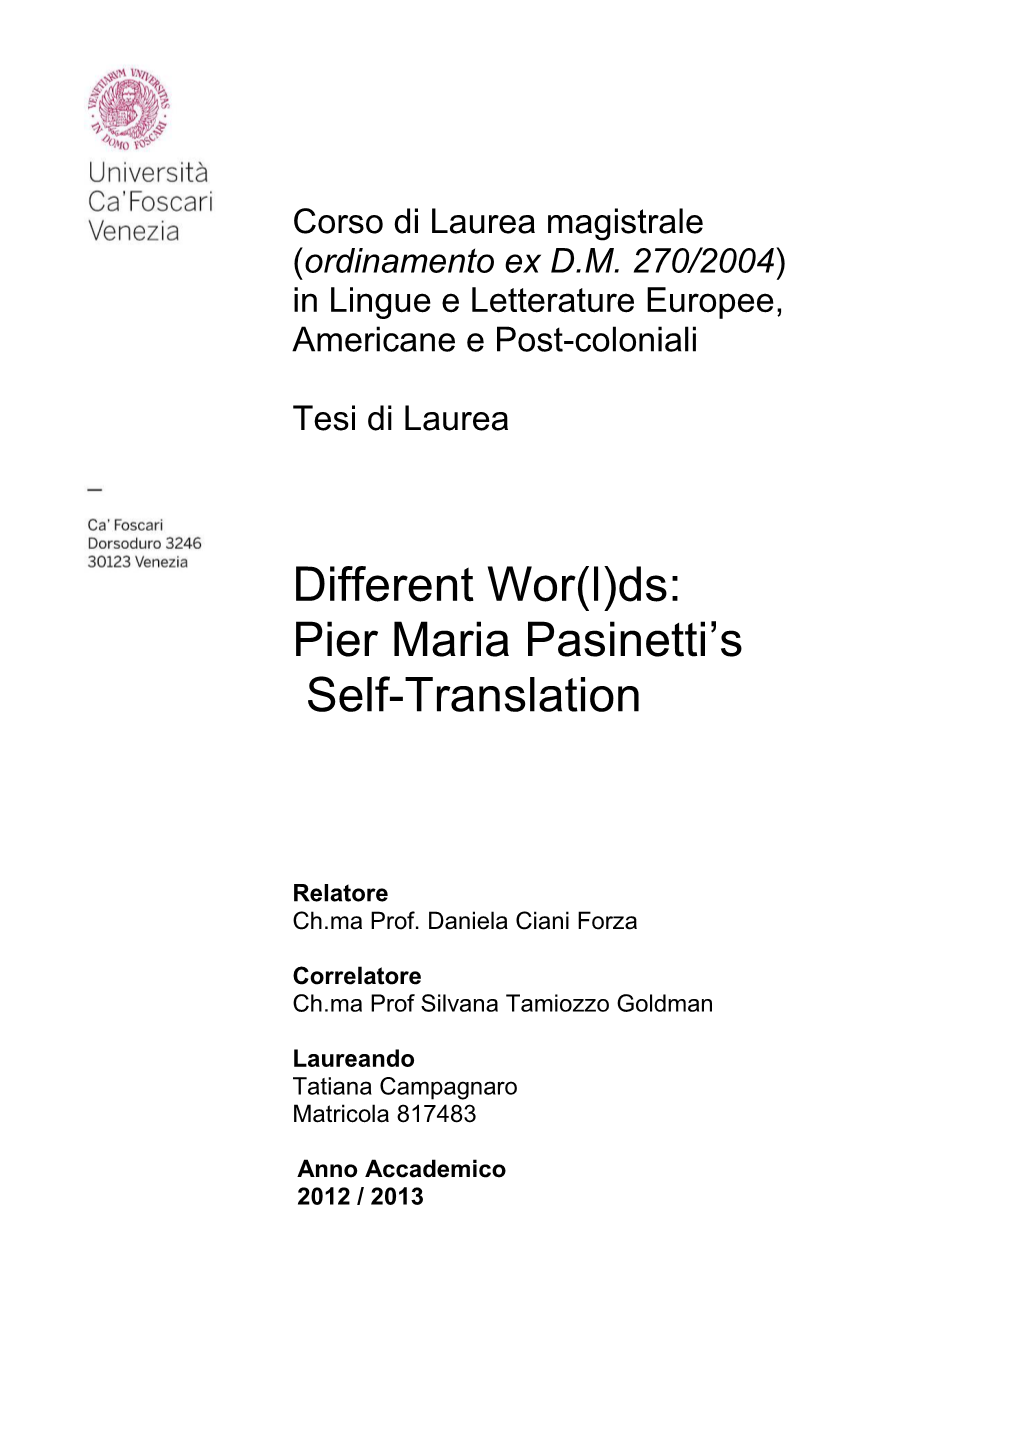 Different Wor(L)Ds: Pier Maria Pasinetti's Self-Translation